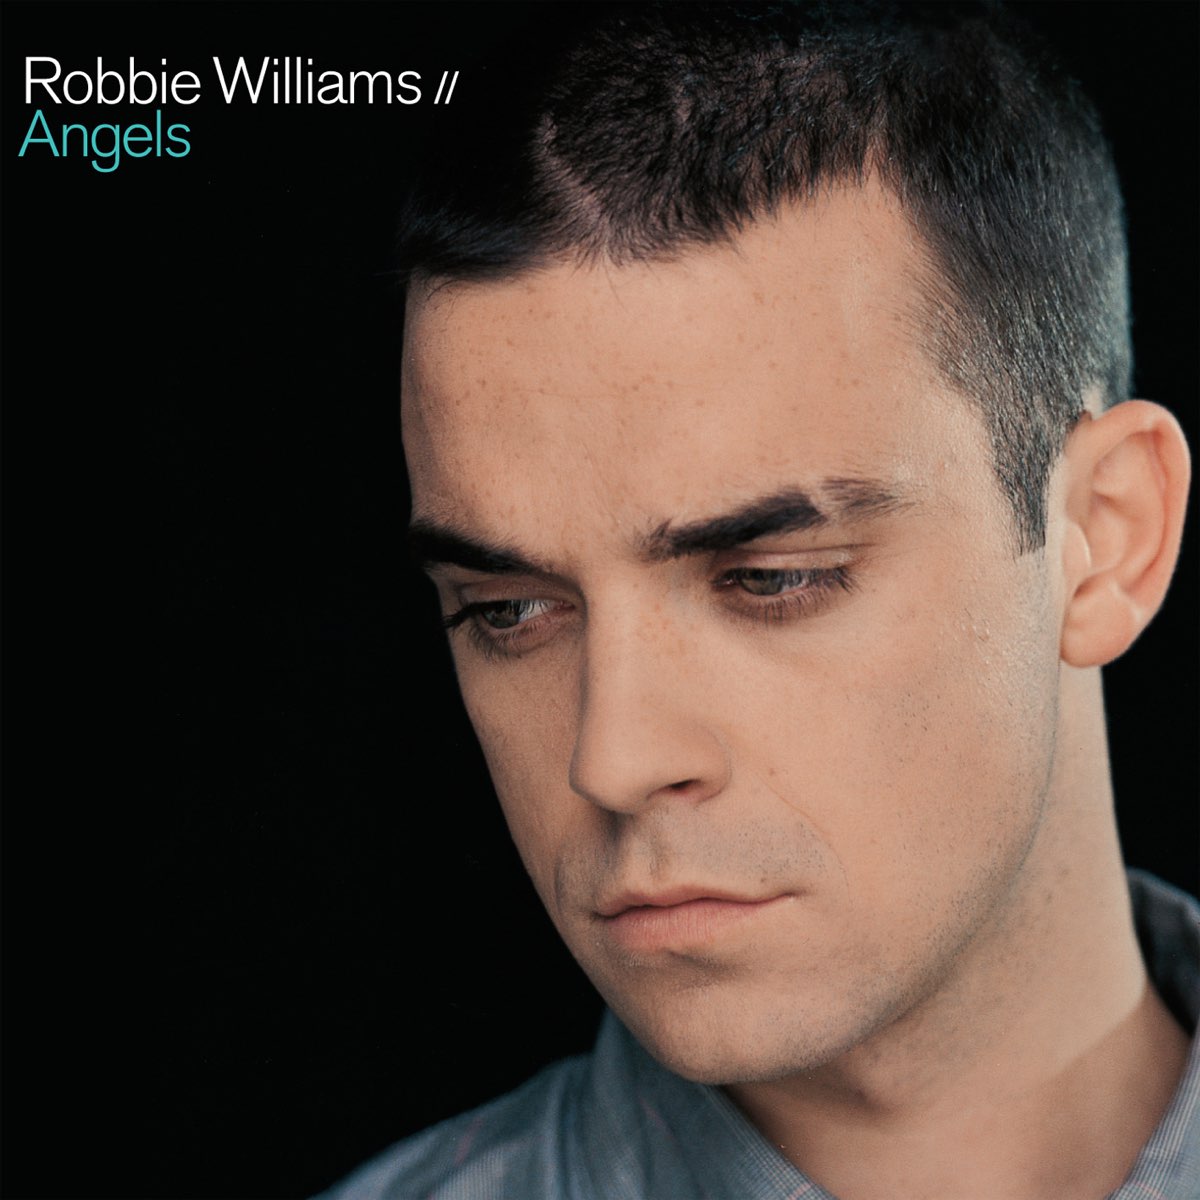 Angels - EP - Album by Robbie Williams - Apple Music